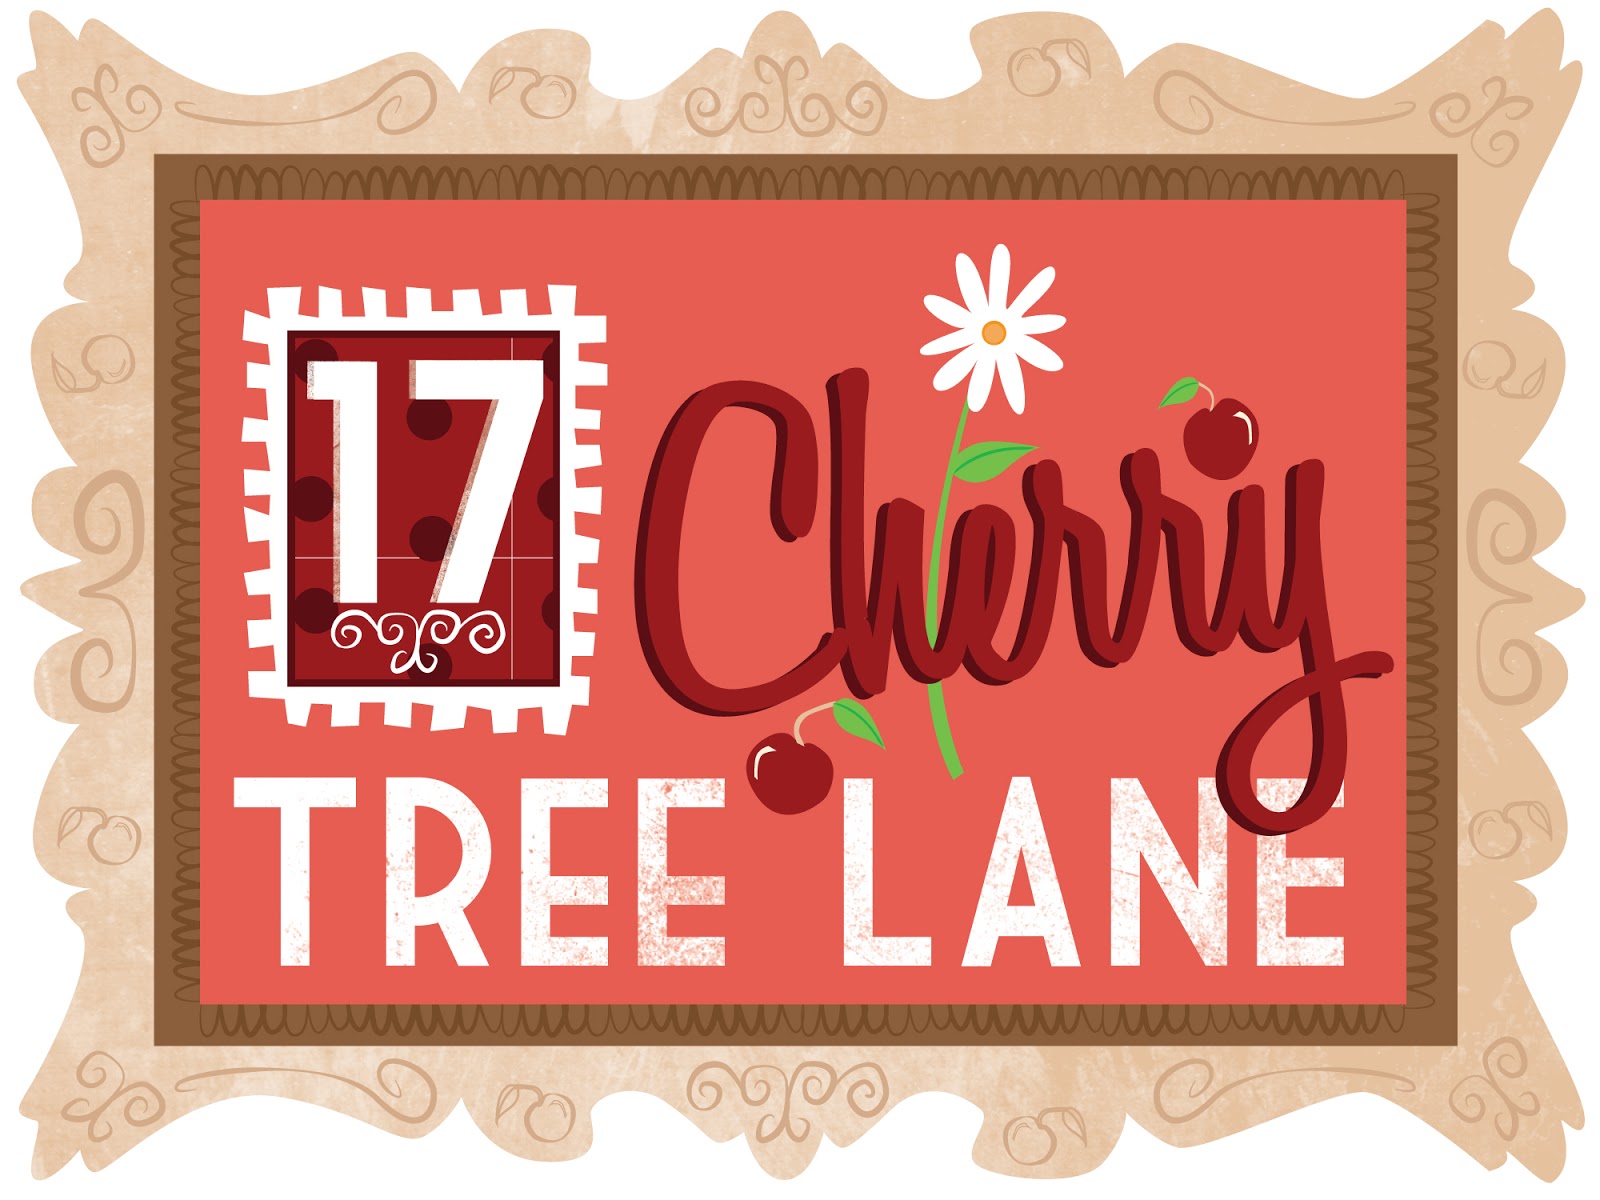 Ln 17. Cherry Tree Lane. 17 Cherry Tree Lane. Cherry Tree Lane Seventeen.